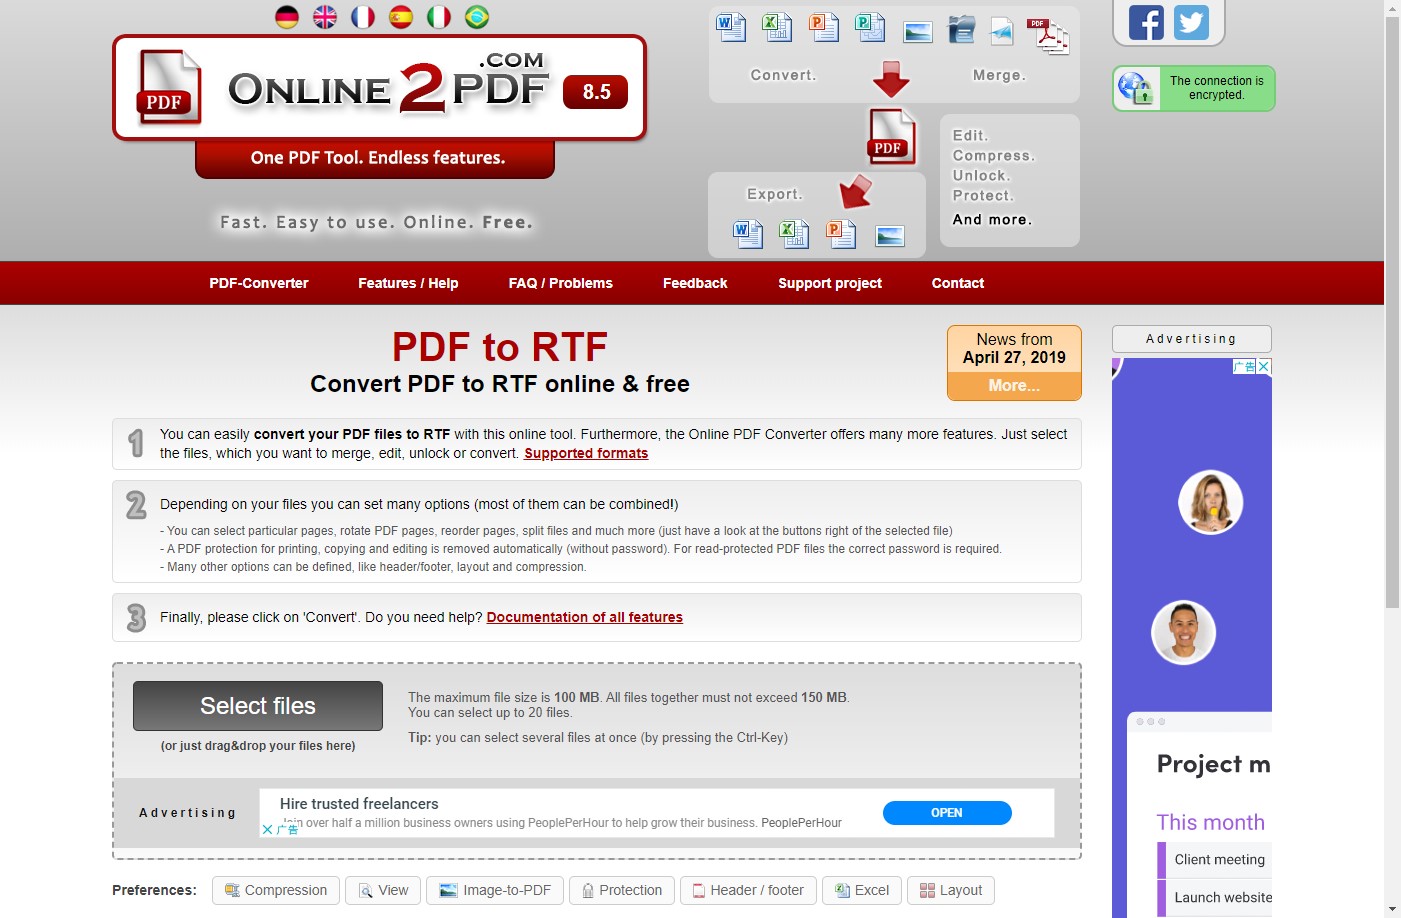 Online2PDF PDF to RTF